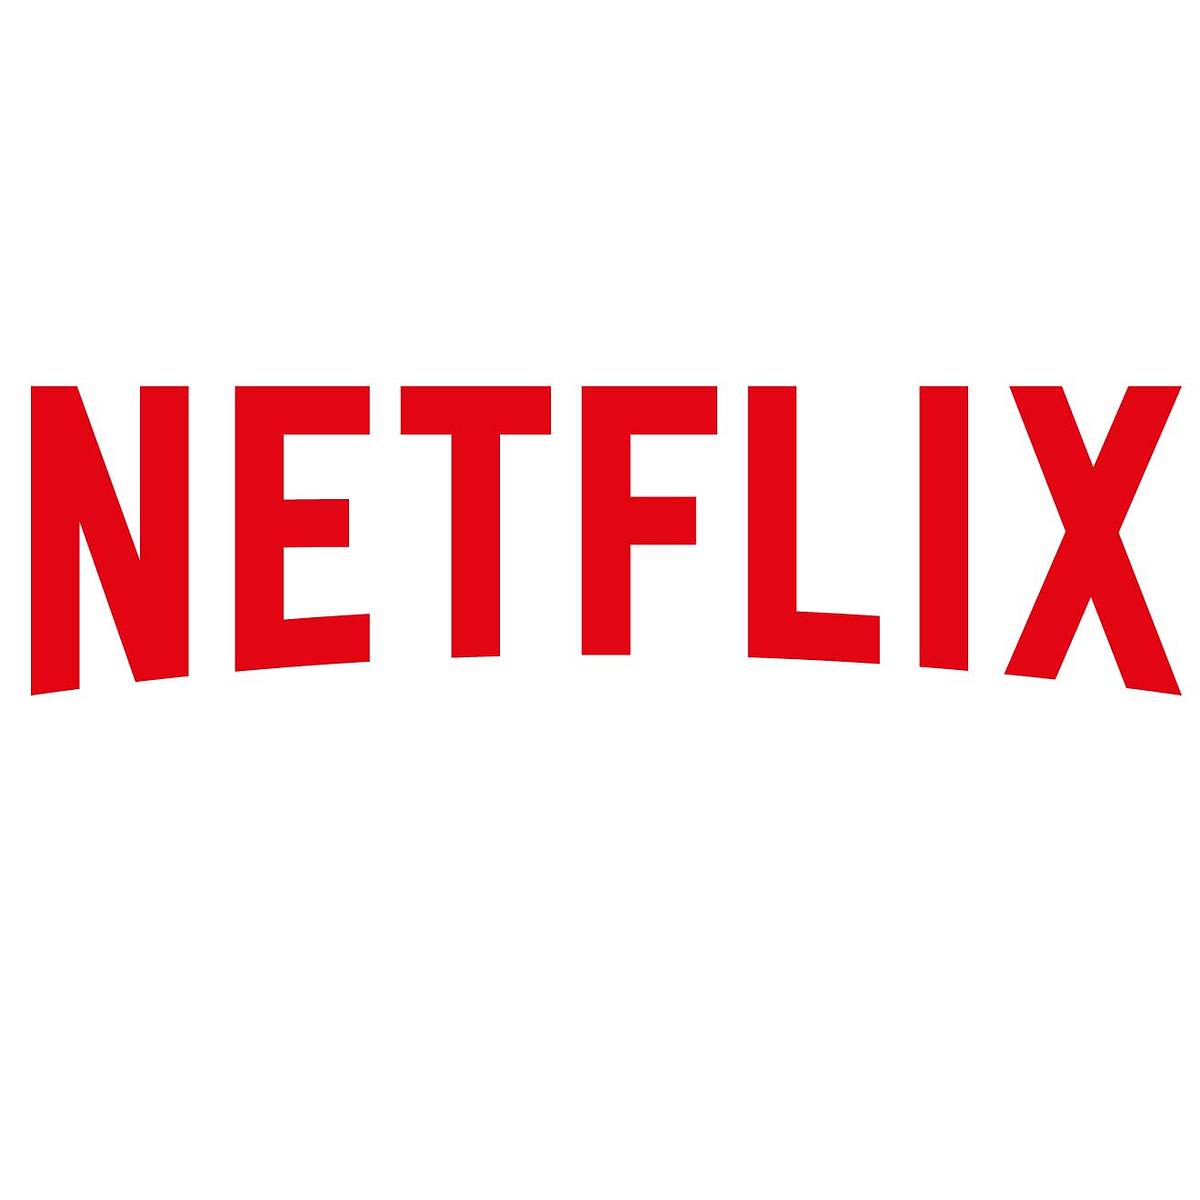 User begeistert Netflix gibt wichtiges Versprechen